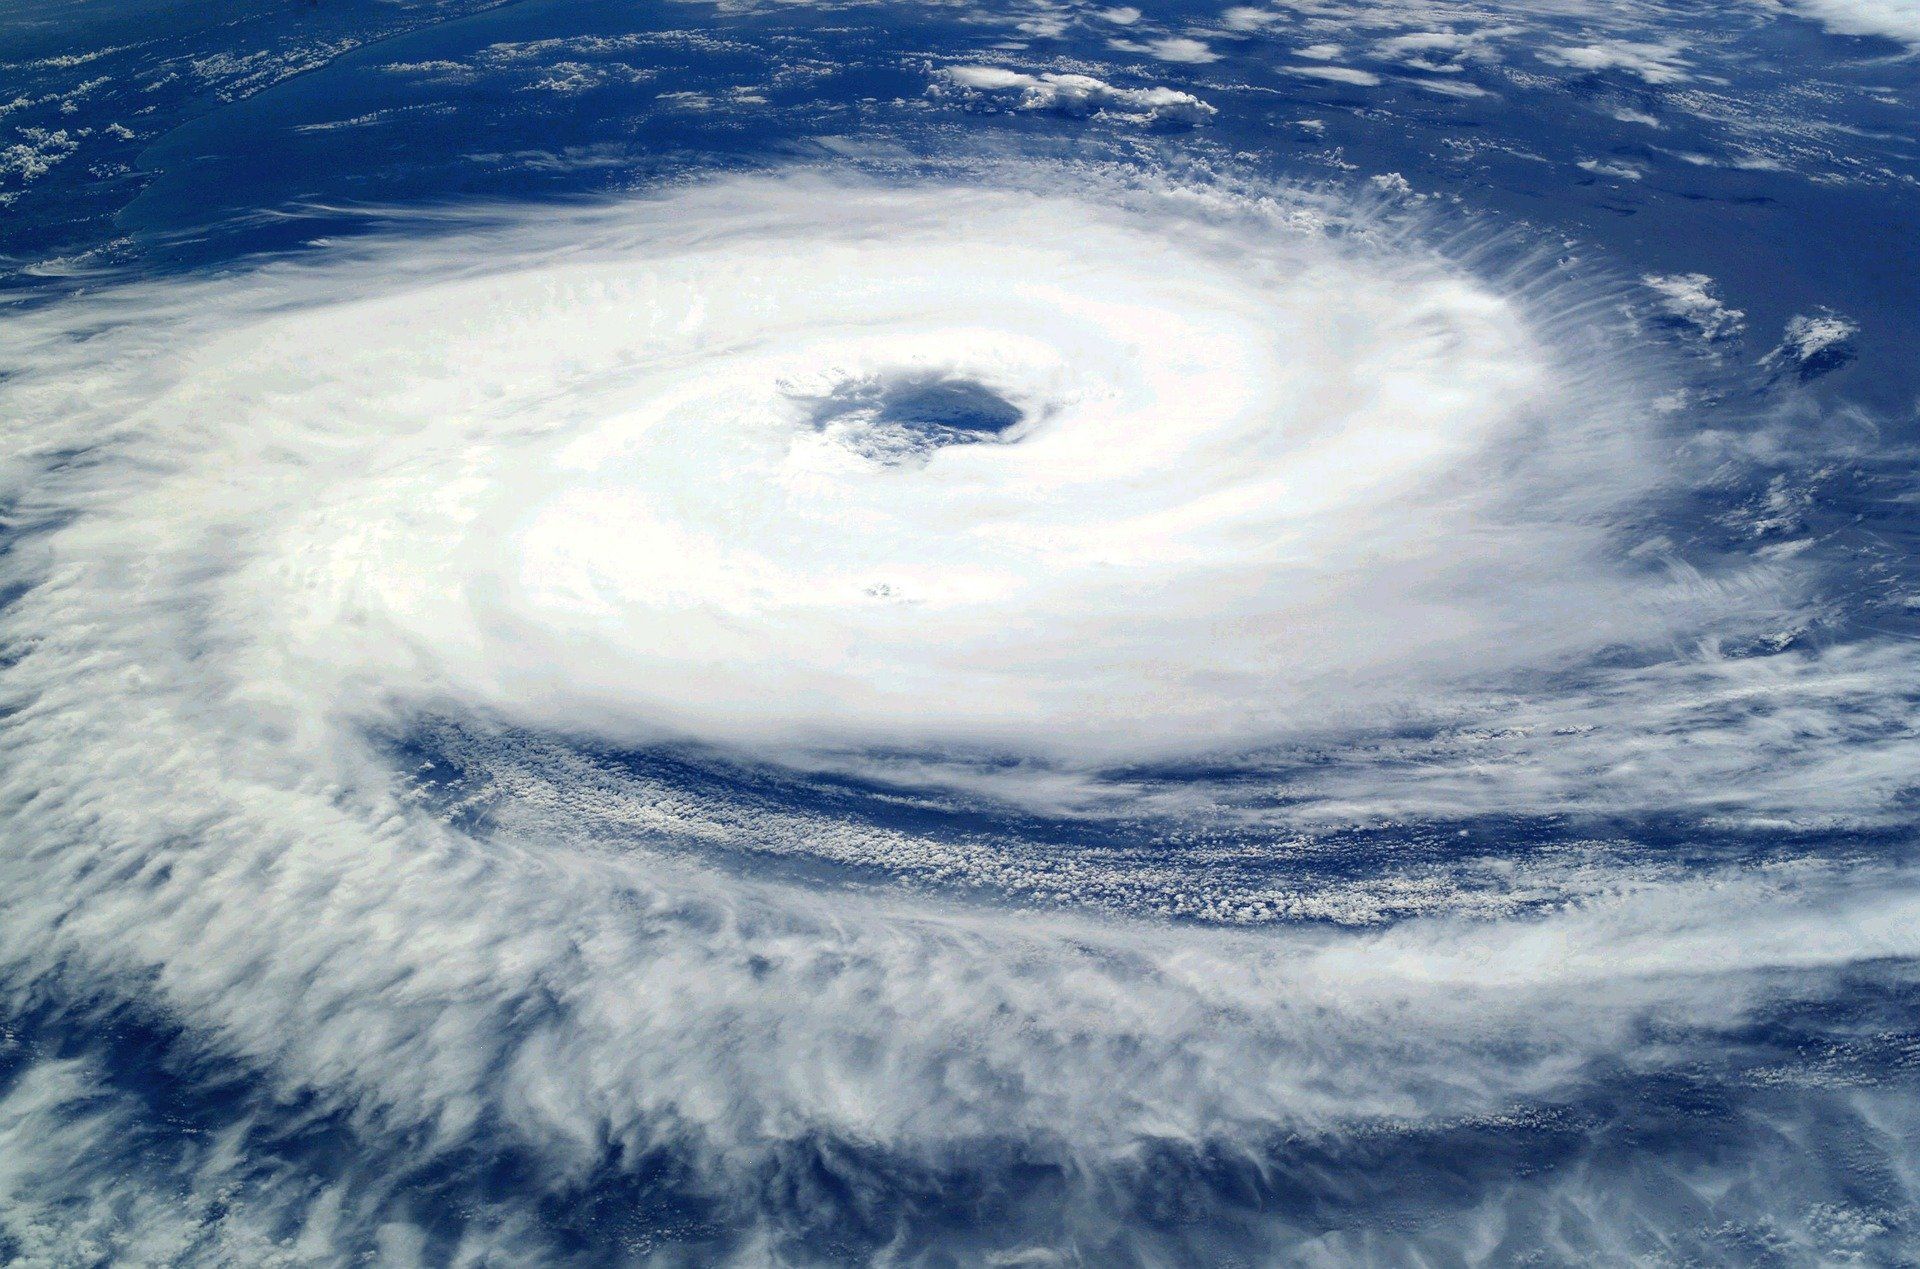 Fiji scrambles to provide aid, as Cyclone Yasa leaves a trail of destruction